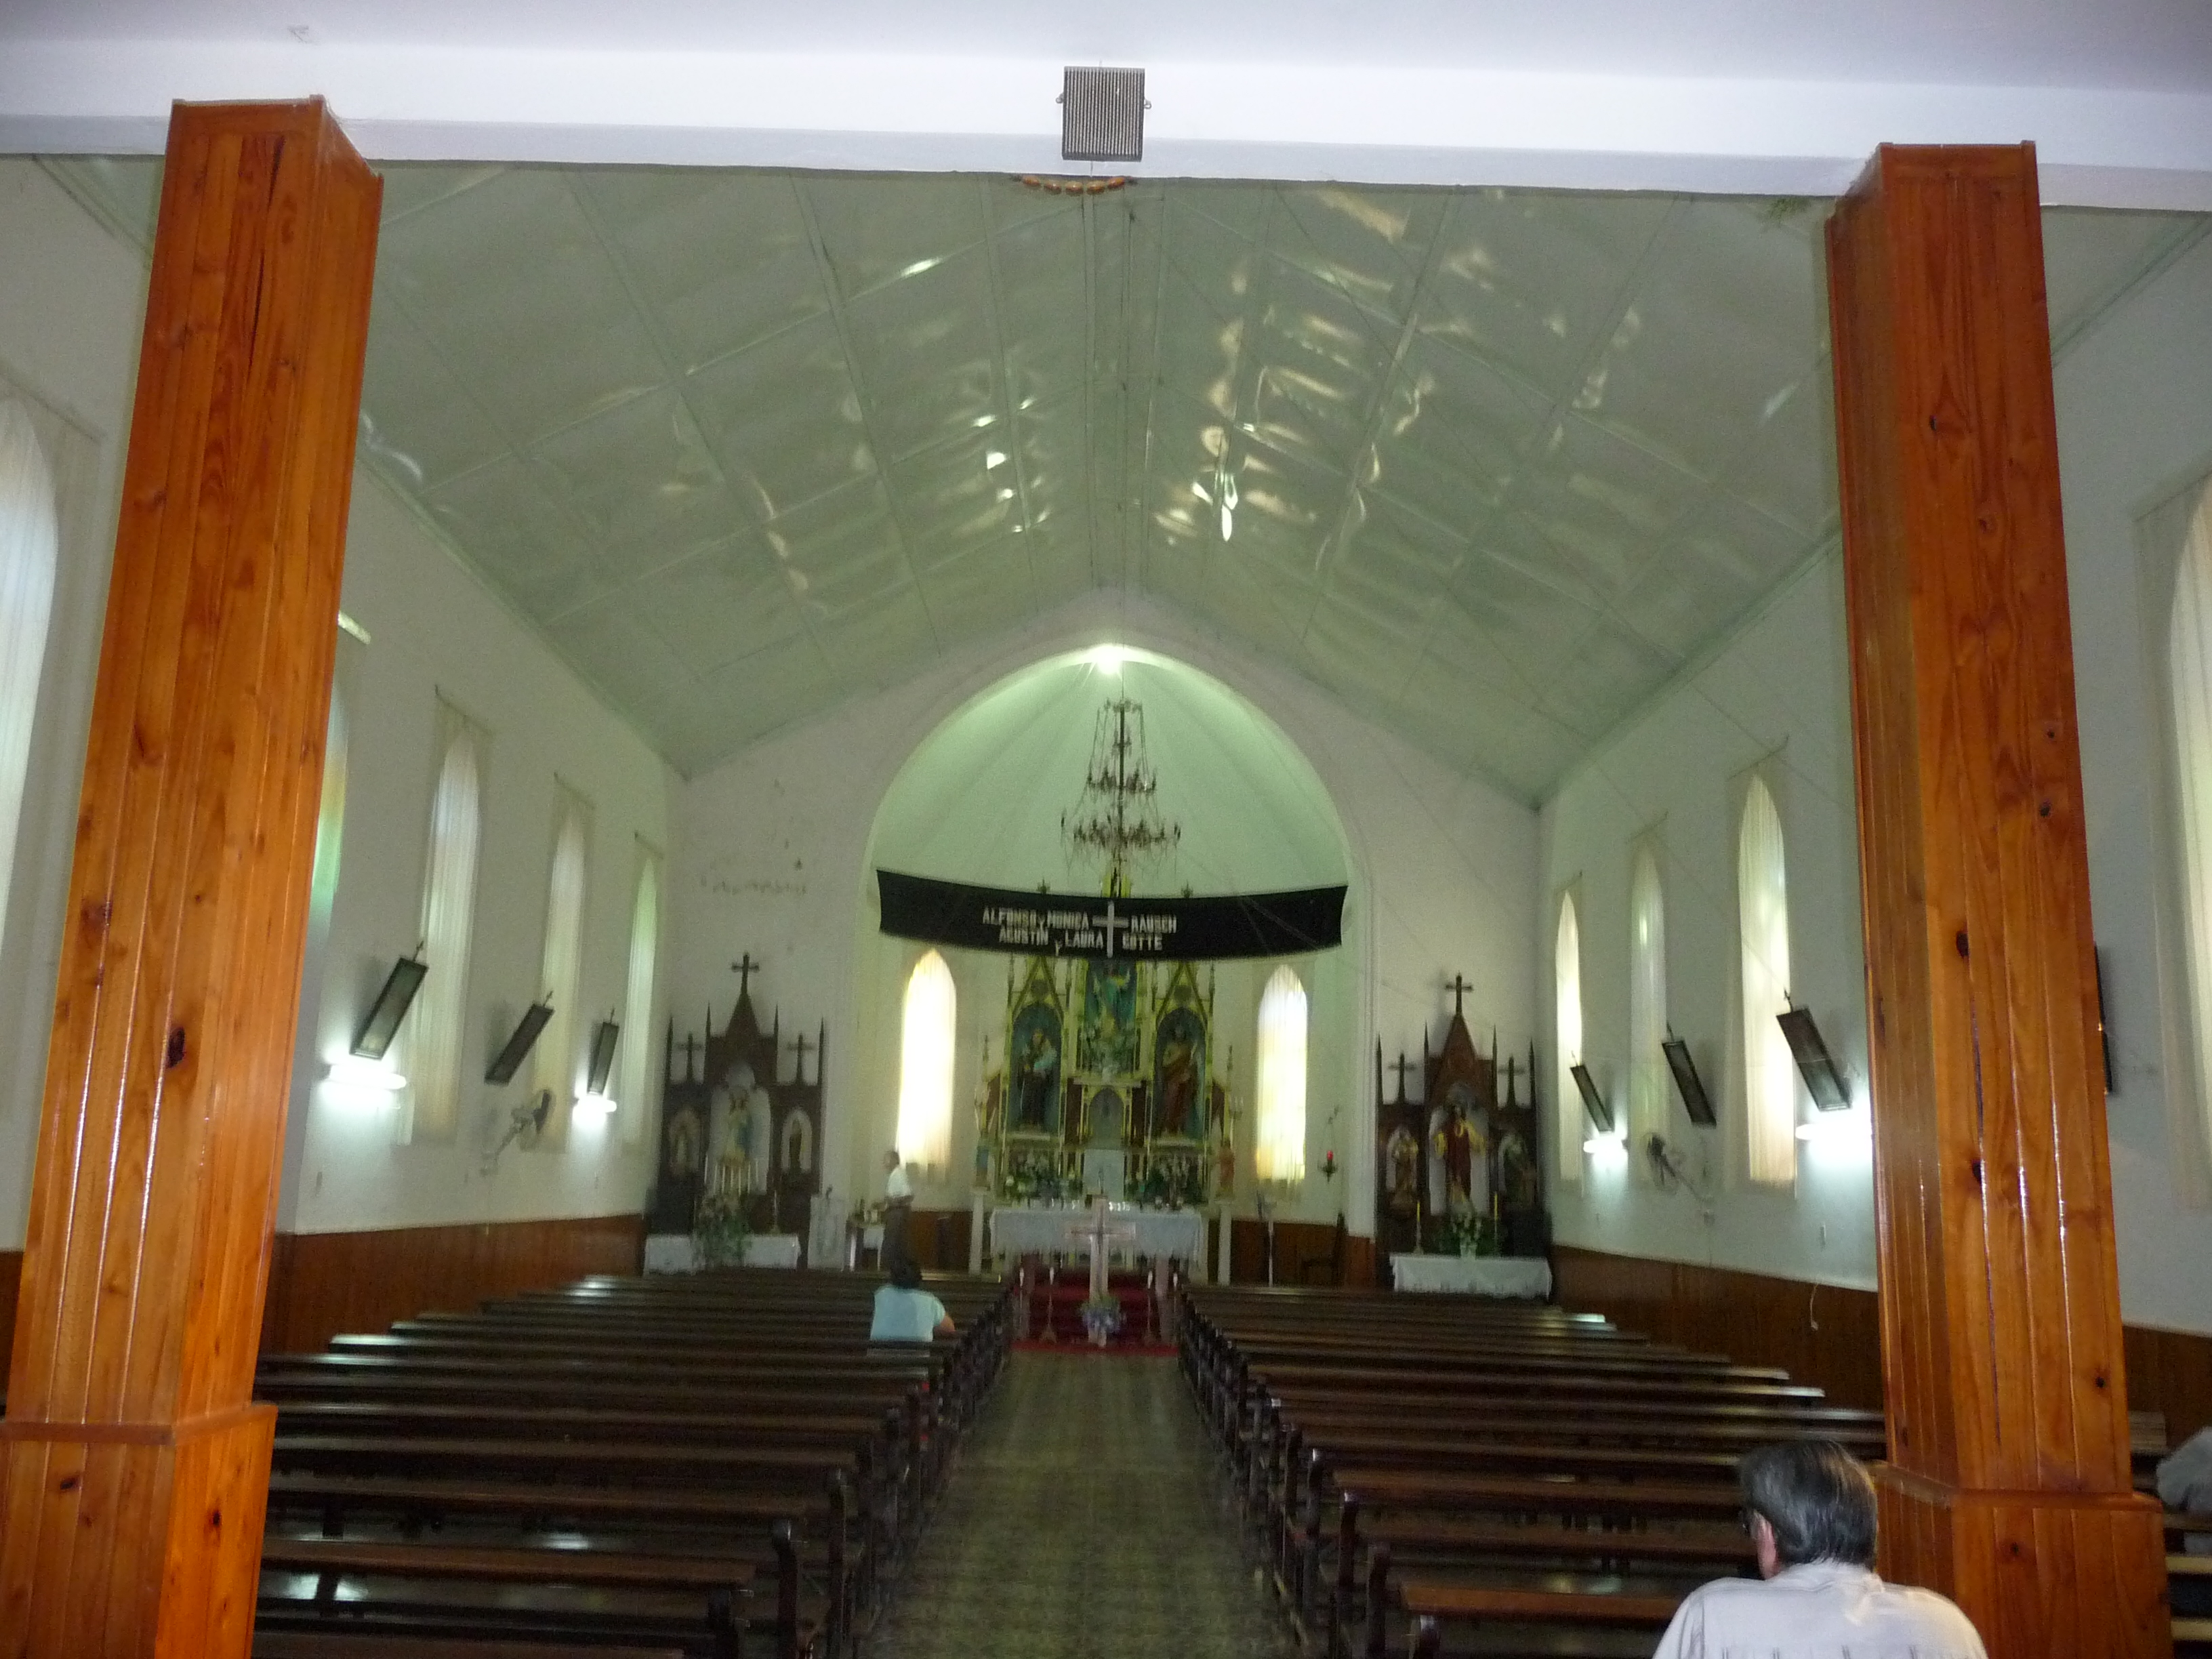 Church interior in Santa Maria. Source: Oscar Herrlein.